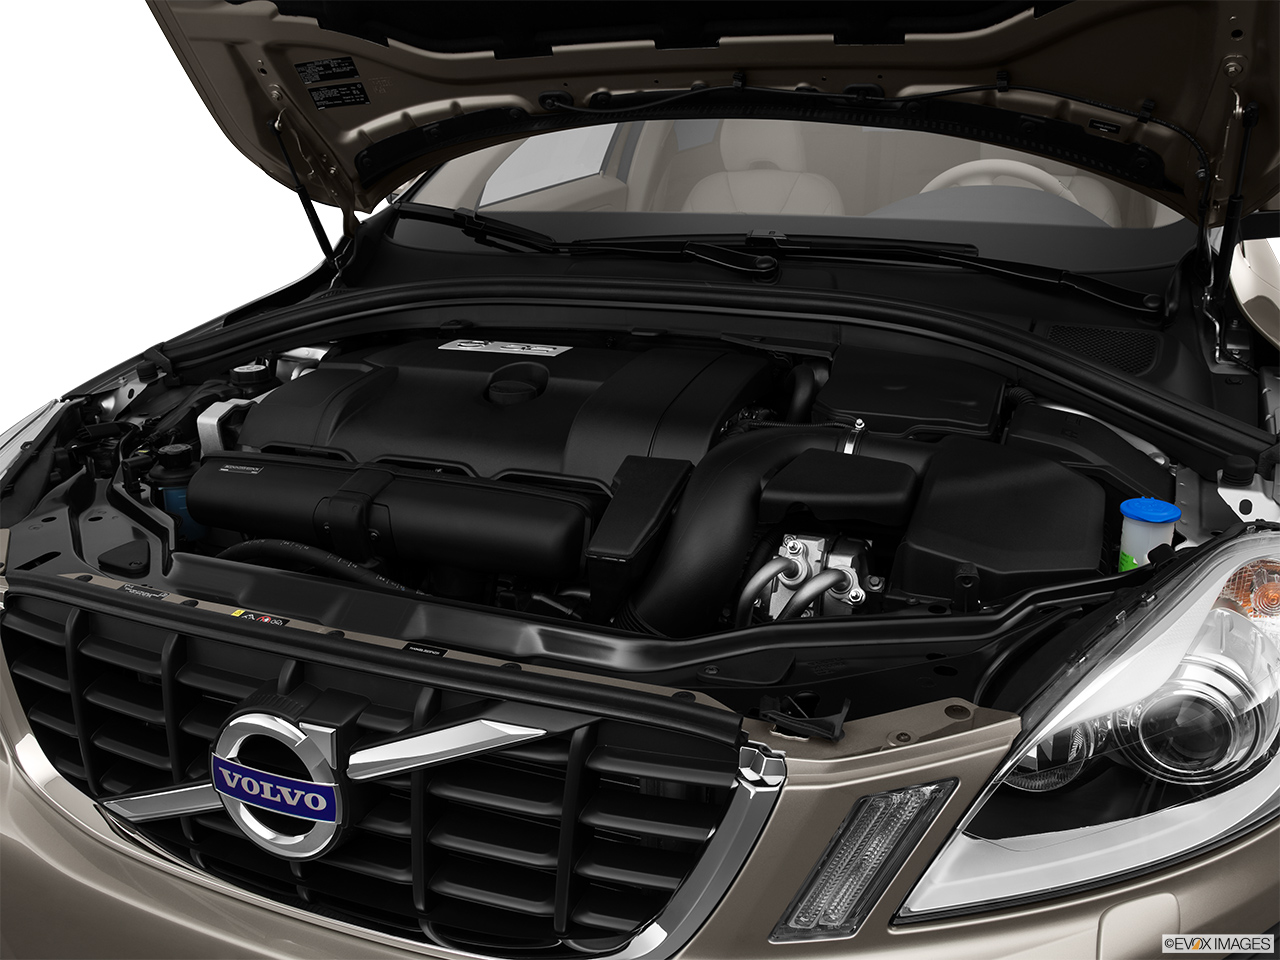 2013 Volvo XC60 3.2 FWD Premier Plus Engine. 